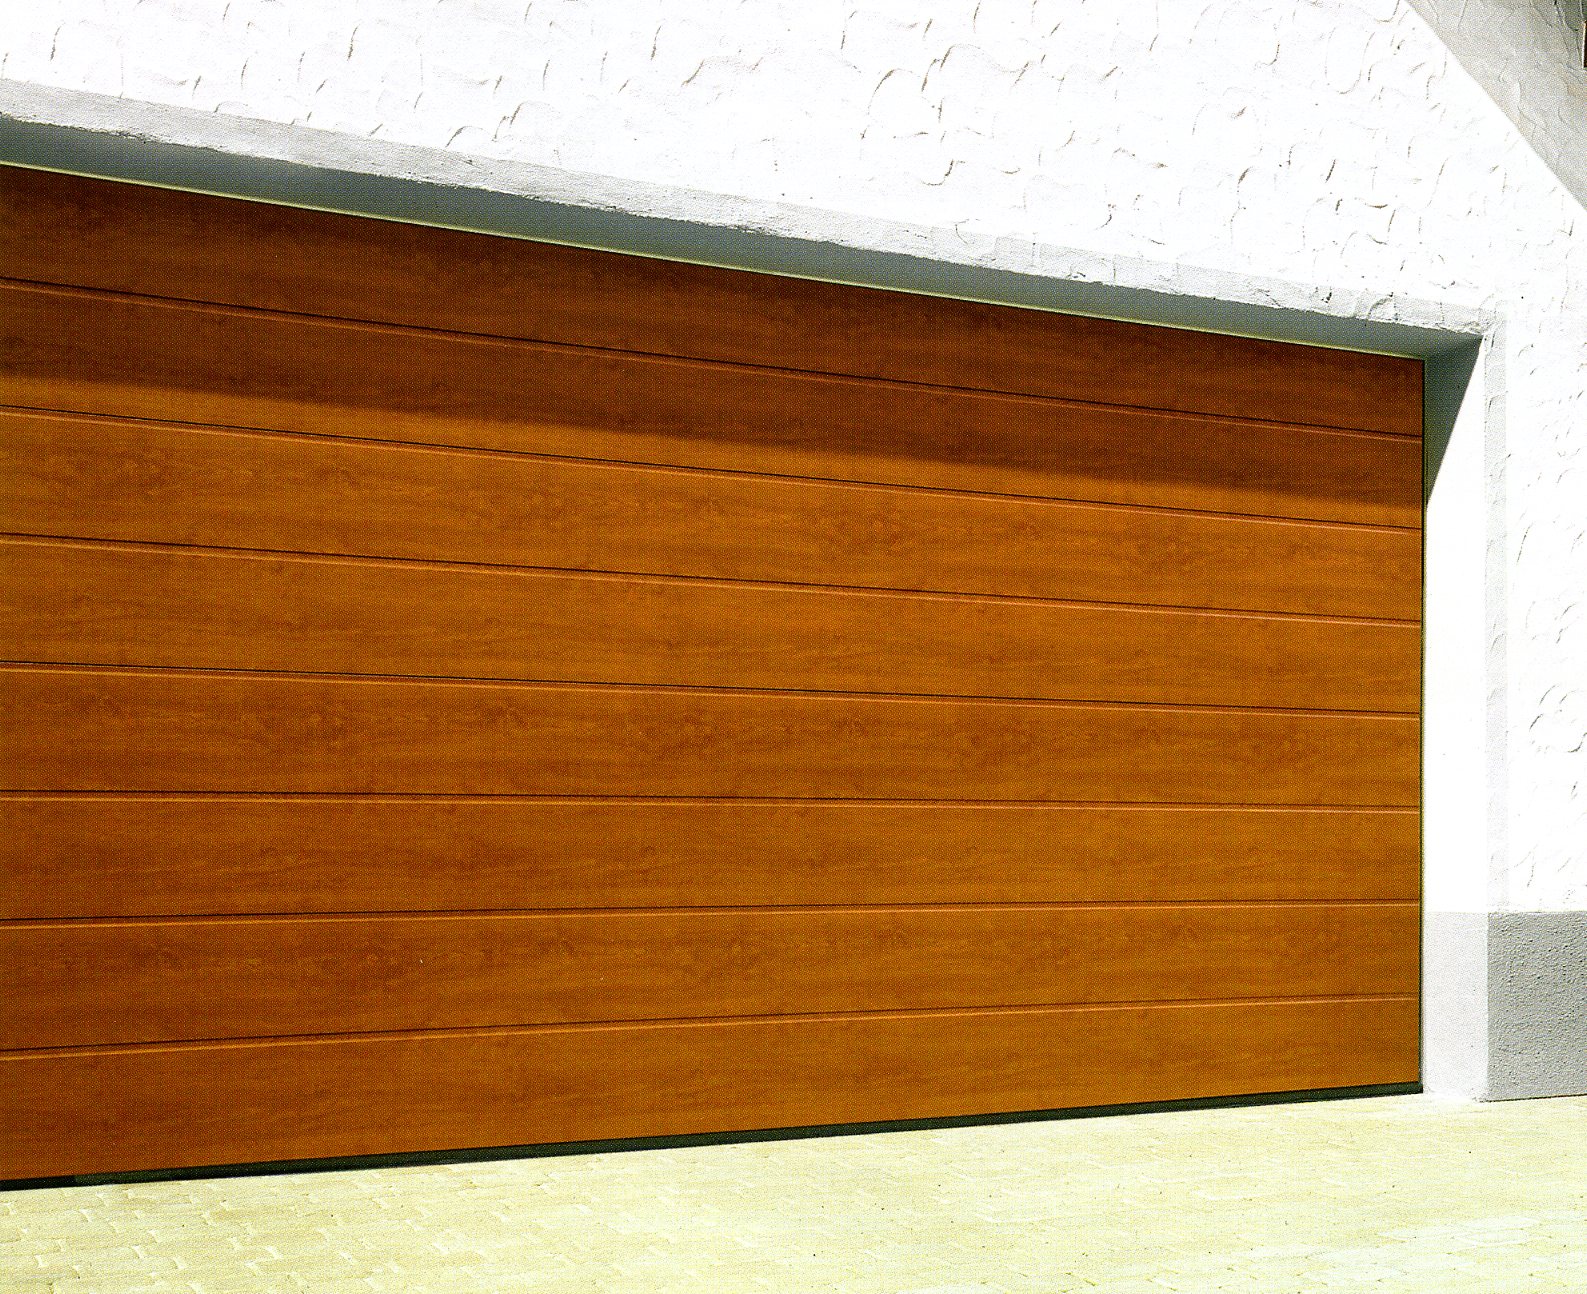 Hormann M-Rib sectional garage door in Golden Oak laminate finish          